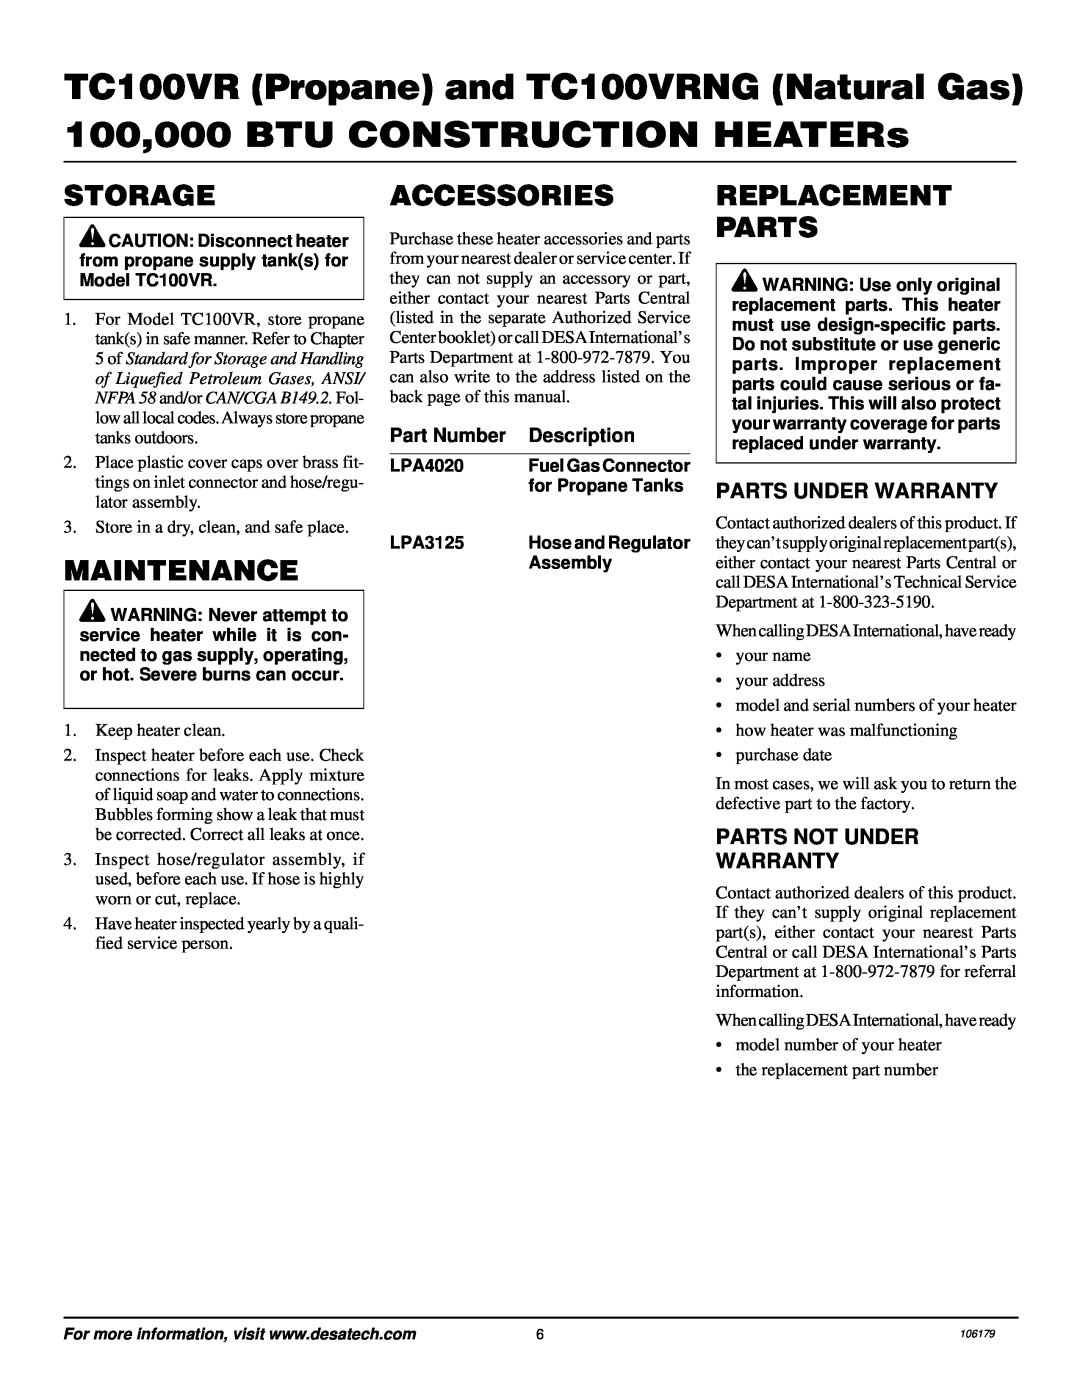 Desa TC100VRNG Storage, Maintenance, Accessories, Replacement Parts, Parts Under Warranty, Parts Not Under Warranty 